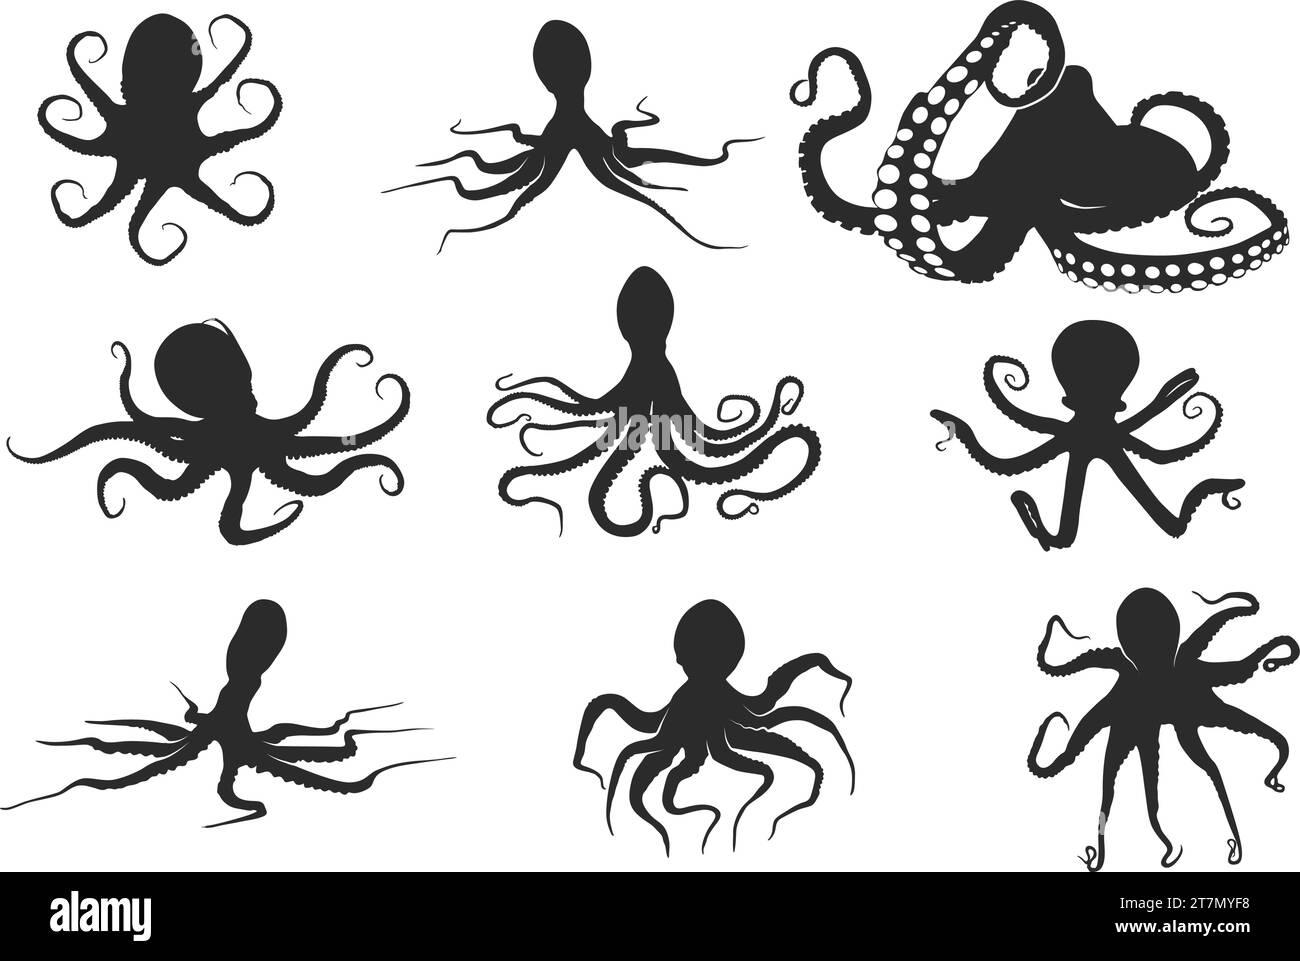 Octopus silhouette, Octopus vector, Octopus silhouettes, Octopus clipart, Octopus icon set Stock Vector